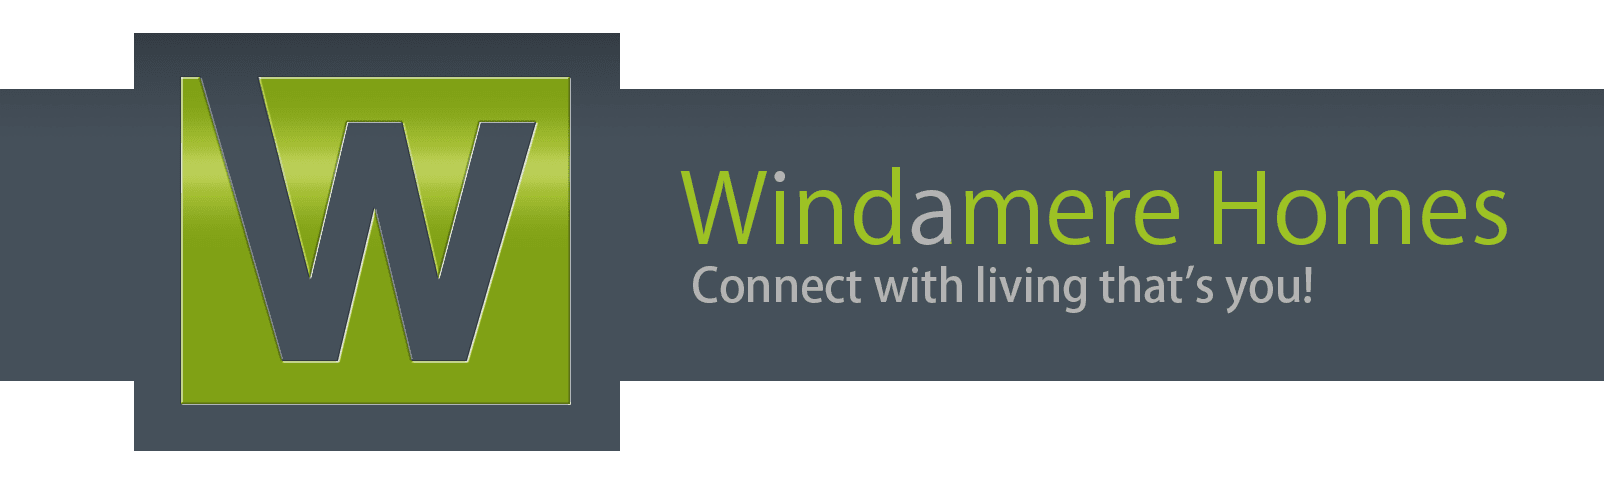 Windamere logo